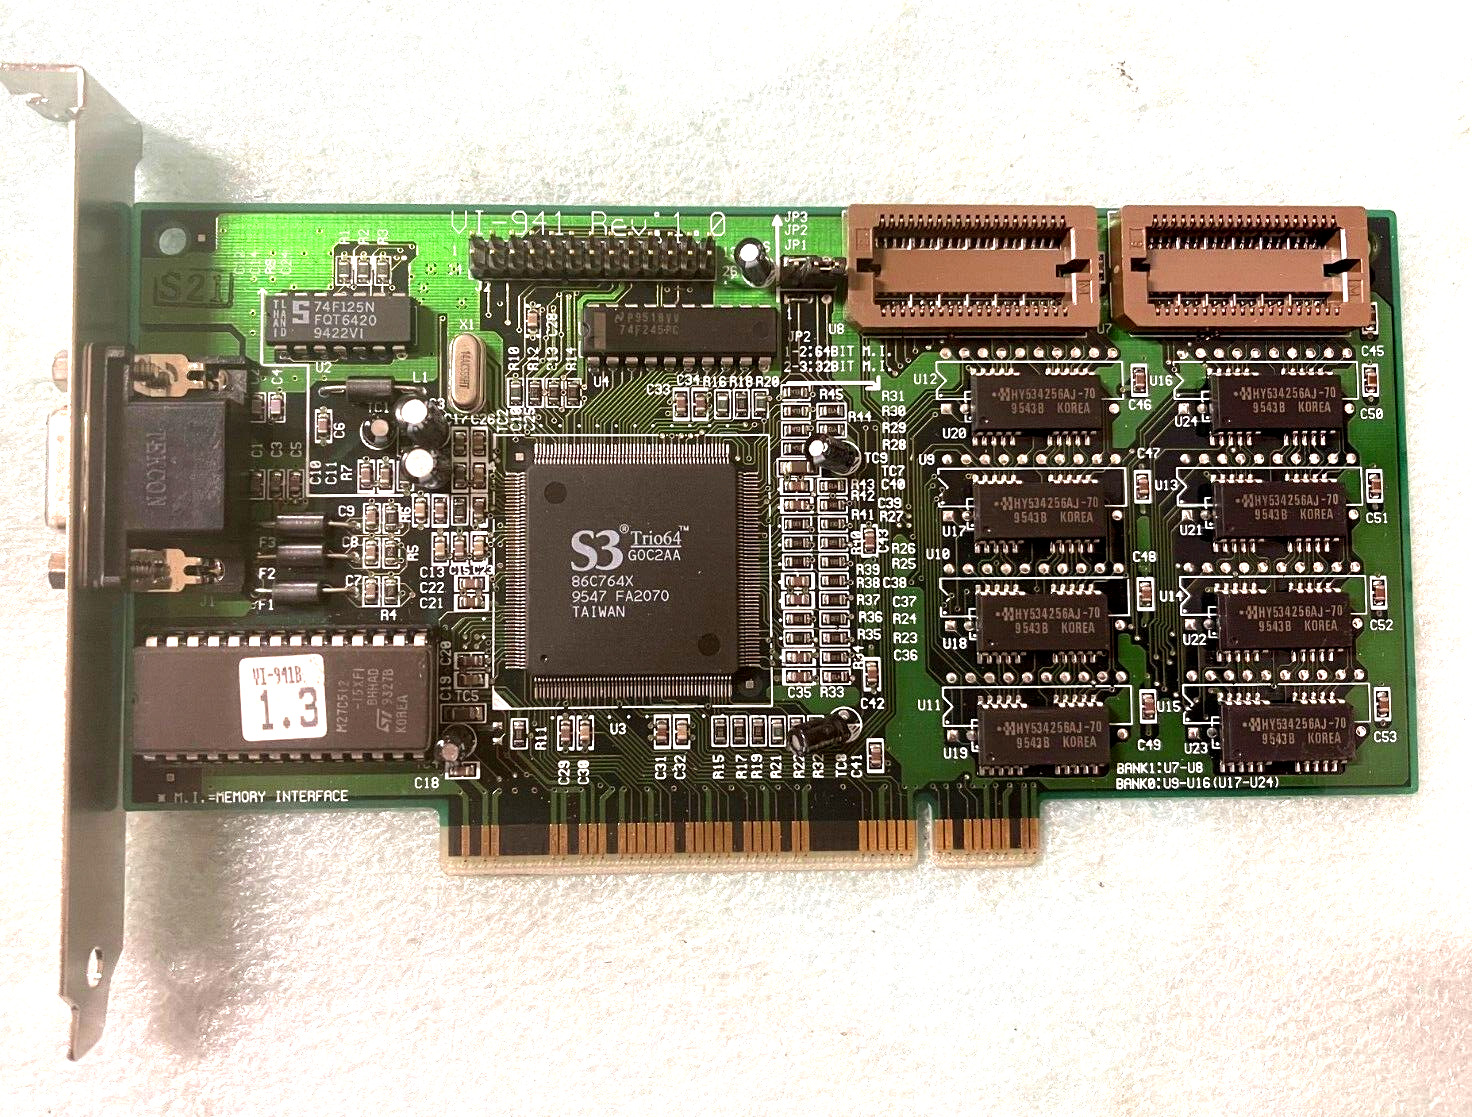 RARE NEW VINTAGE VI-940 S3 TRIO64 1 MB EXP TO 2 MB PCI VGA CARD MXB140A